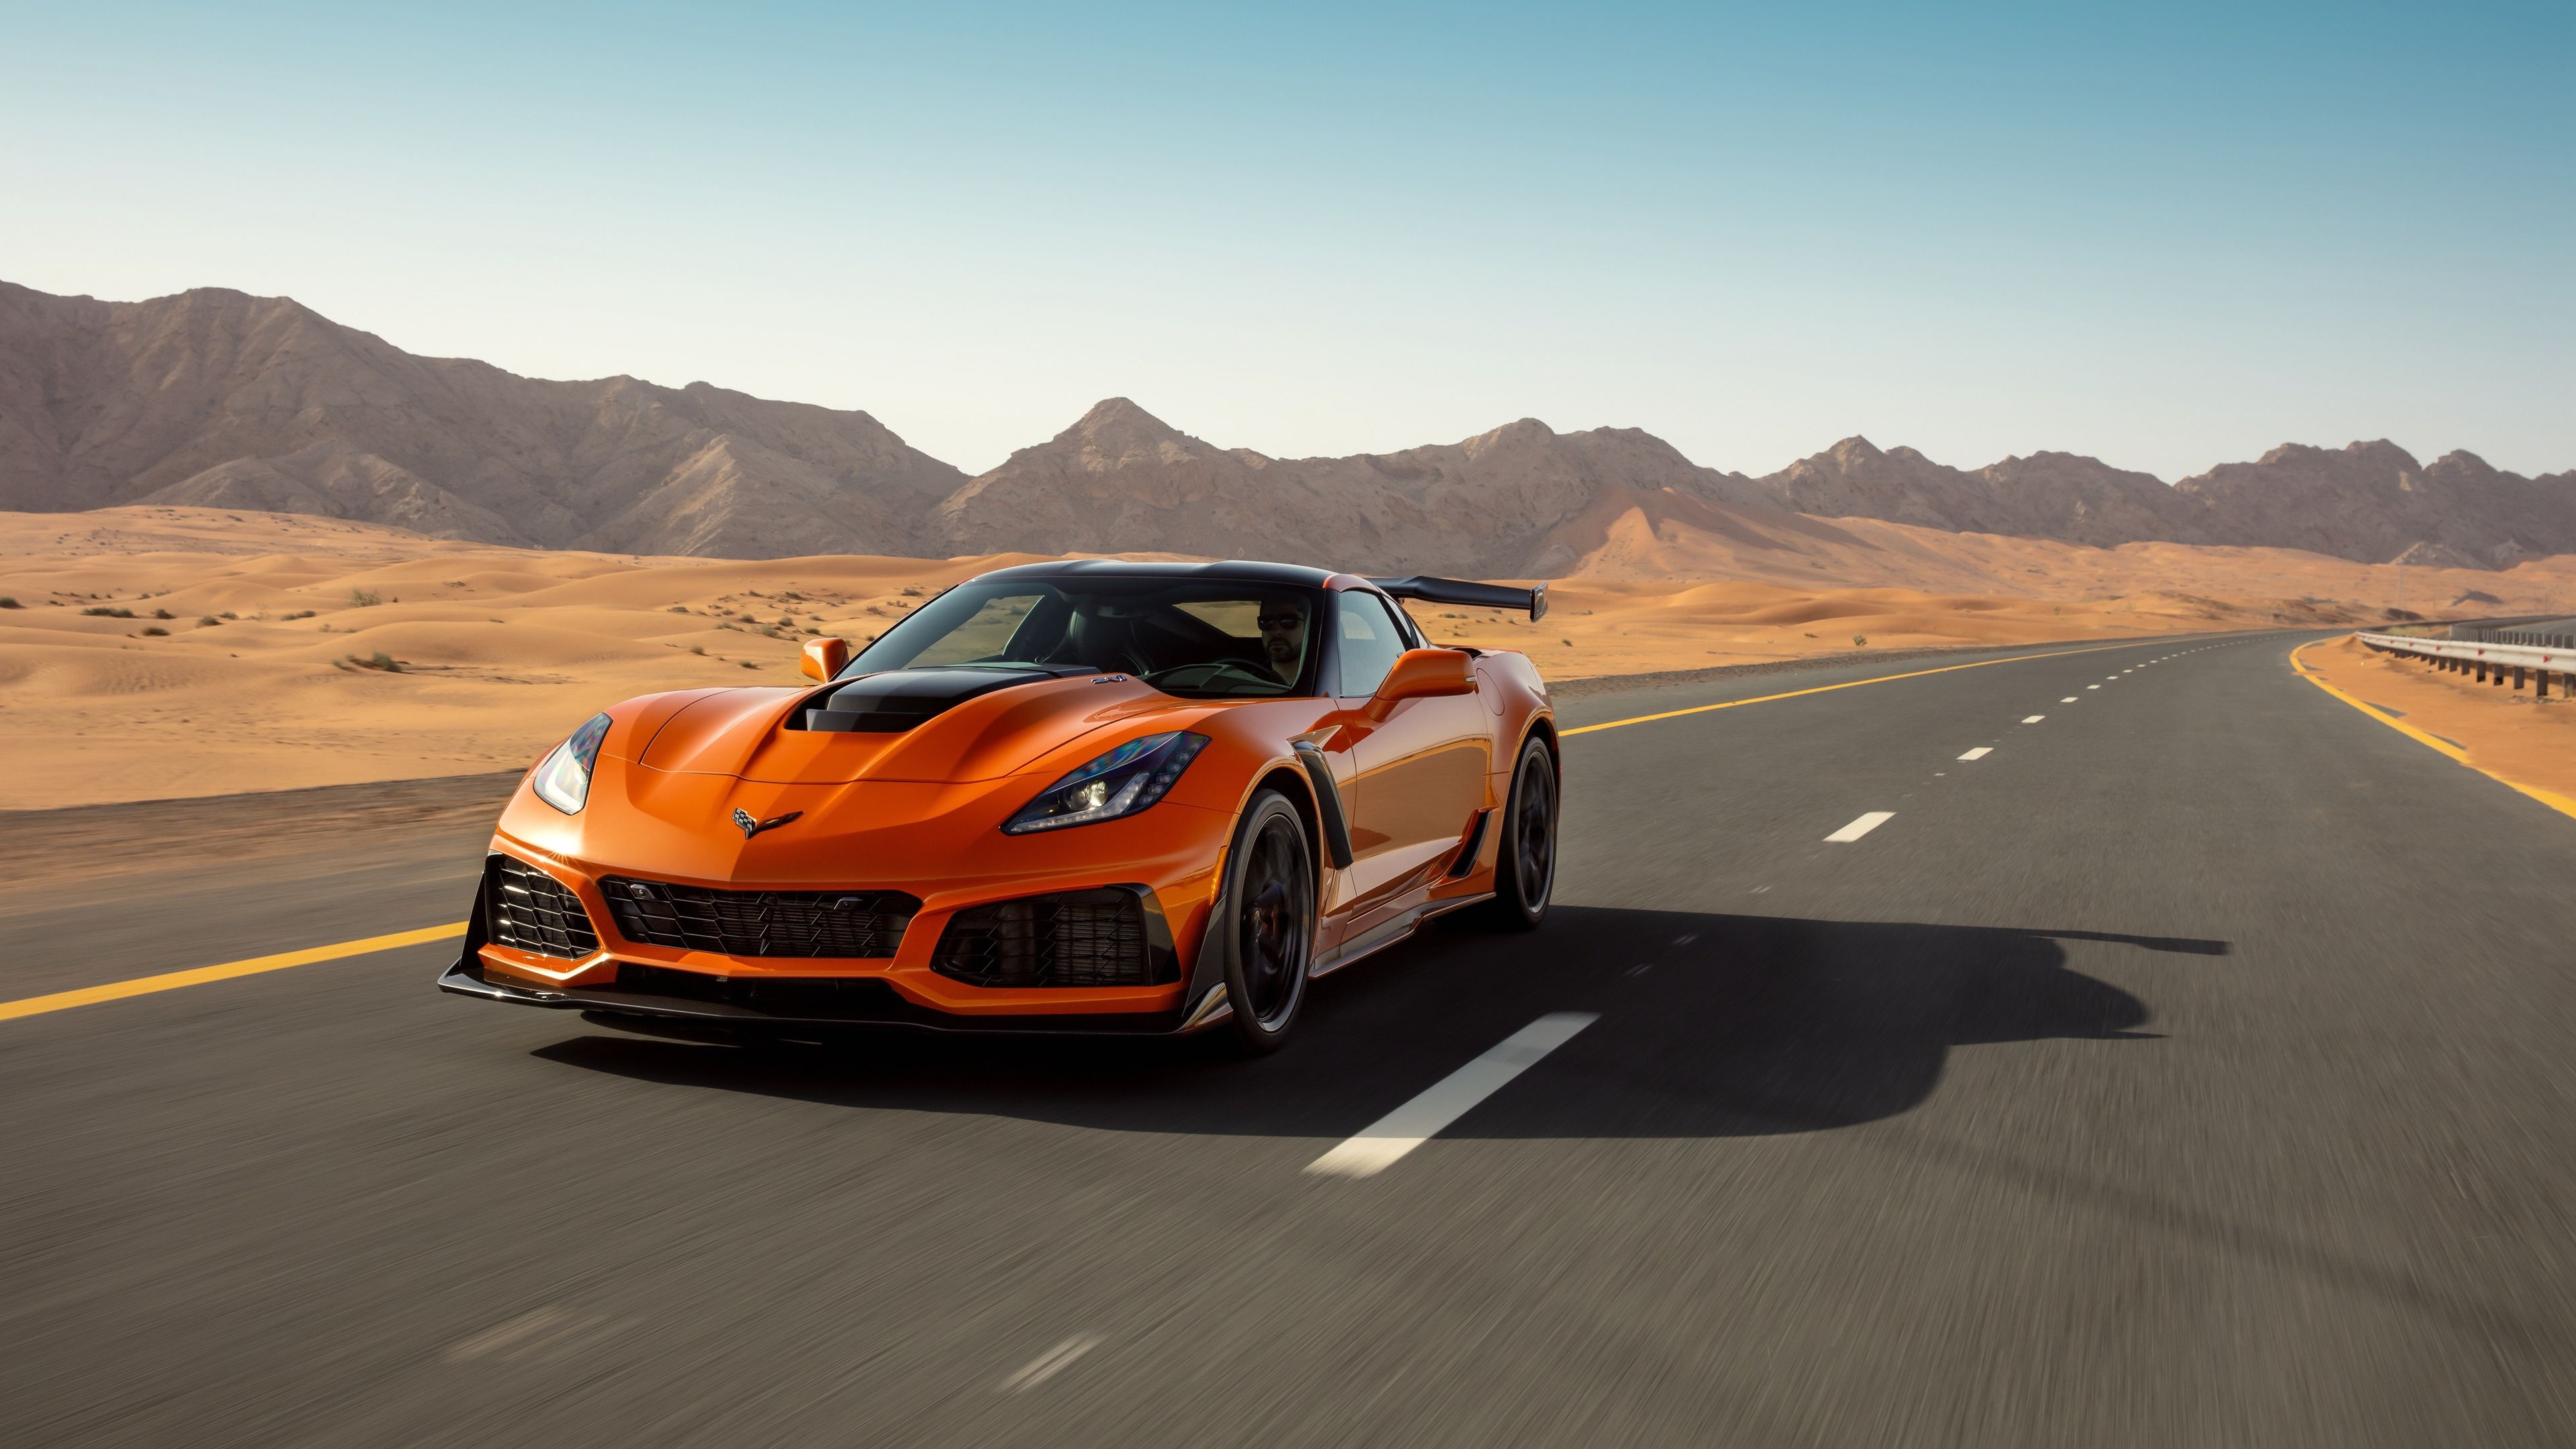 Corvette: C7 ZR1 2019, 755-hp engine, American sports car, Supercharged version. 3840x2160 4K Wallpaper.